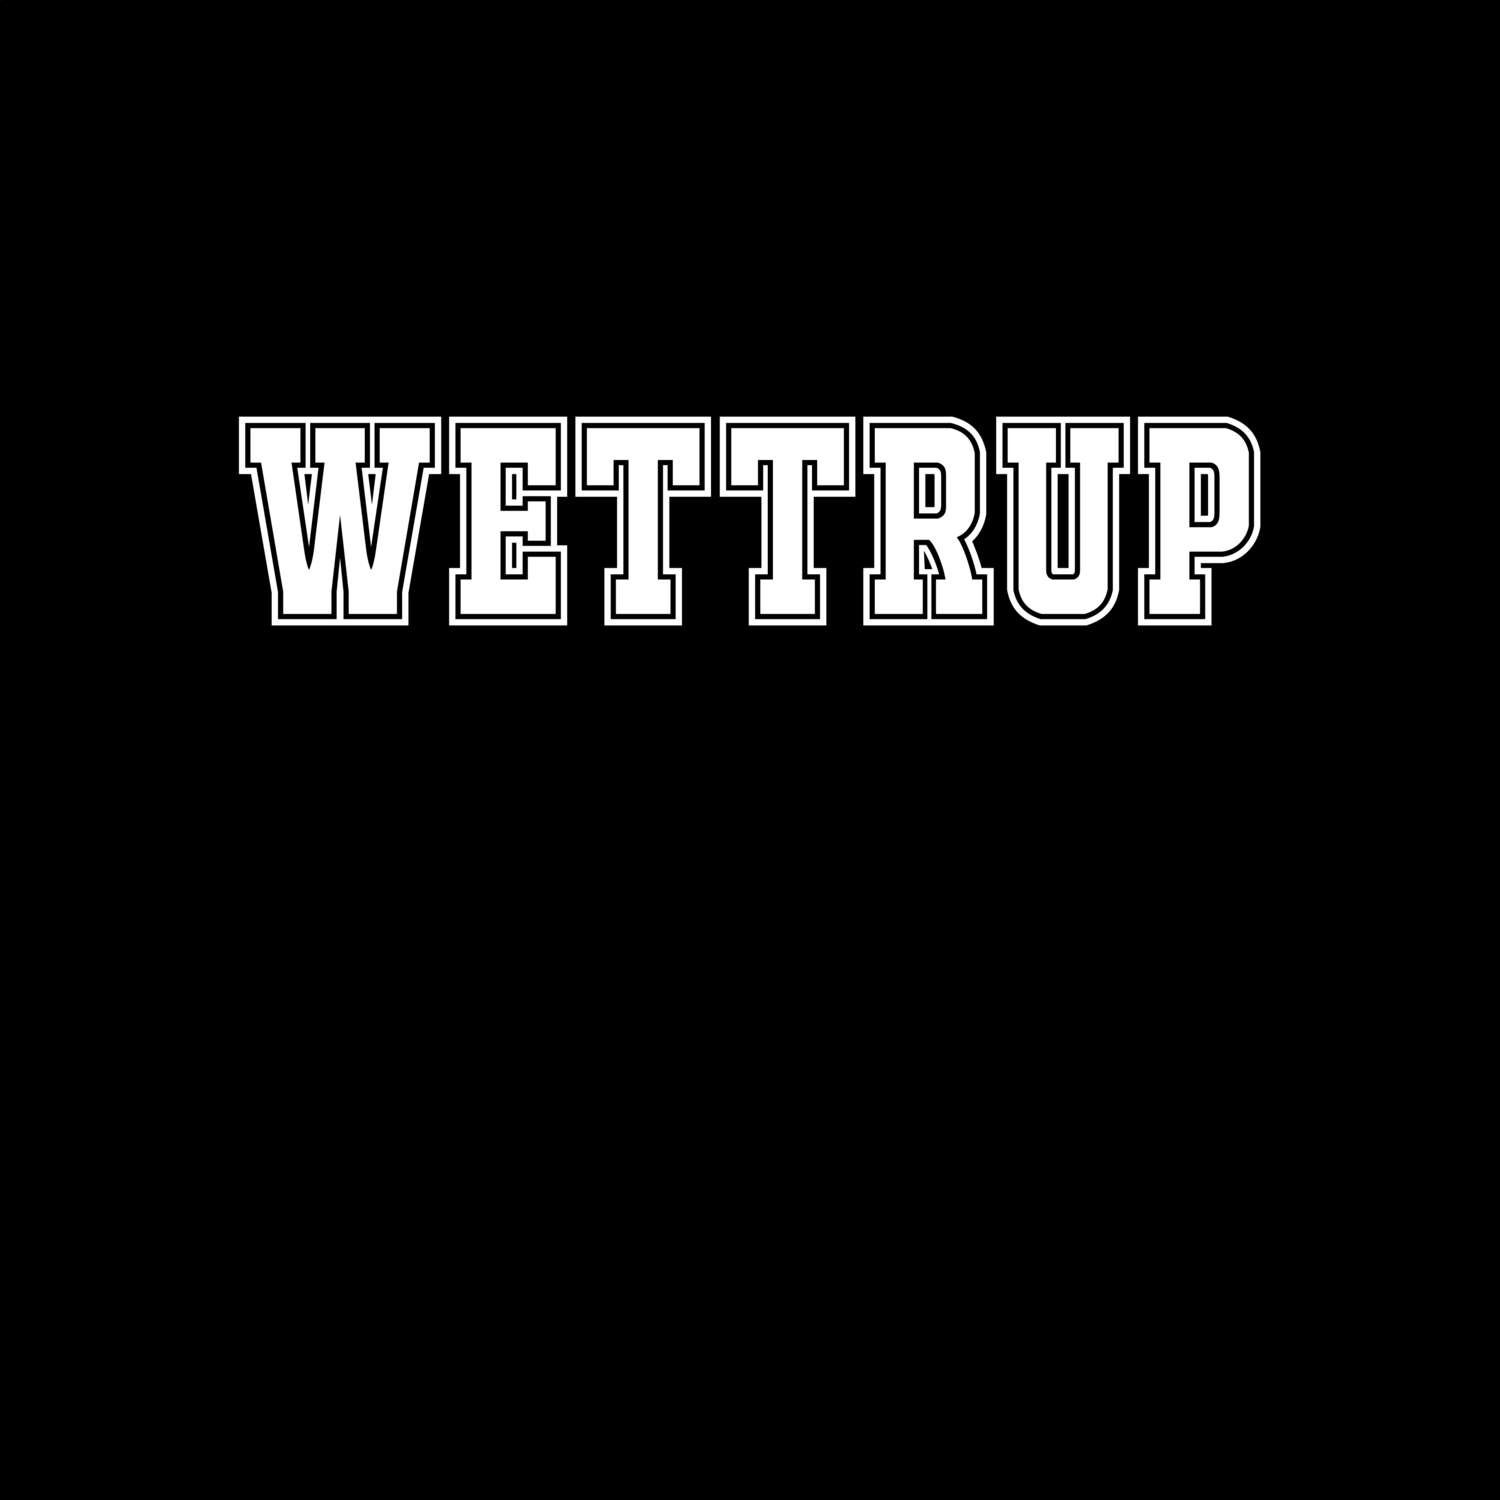 Wettrup T-Shirt »Classic«